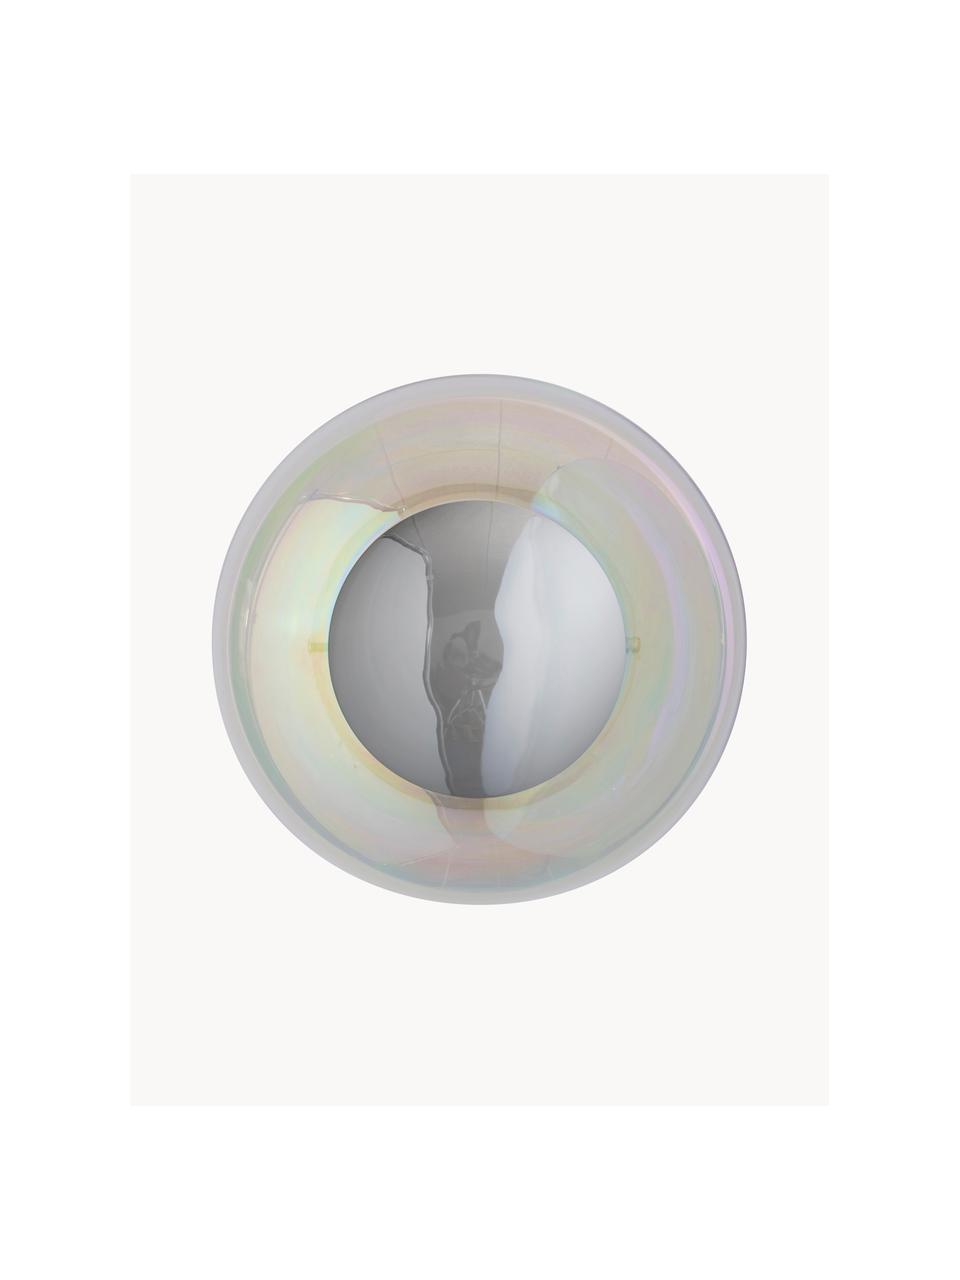 Mondgeblazen wandlamp Horizon, Lampenkap: mondgeblazen glas, Iriserend, zilverkleurig, Ø 21 x D 17 cm